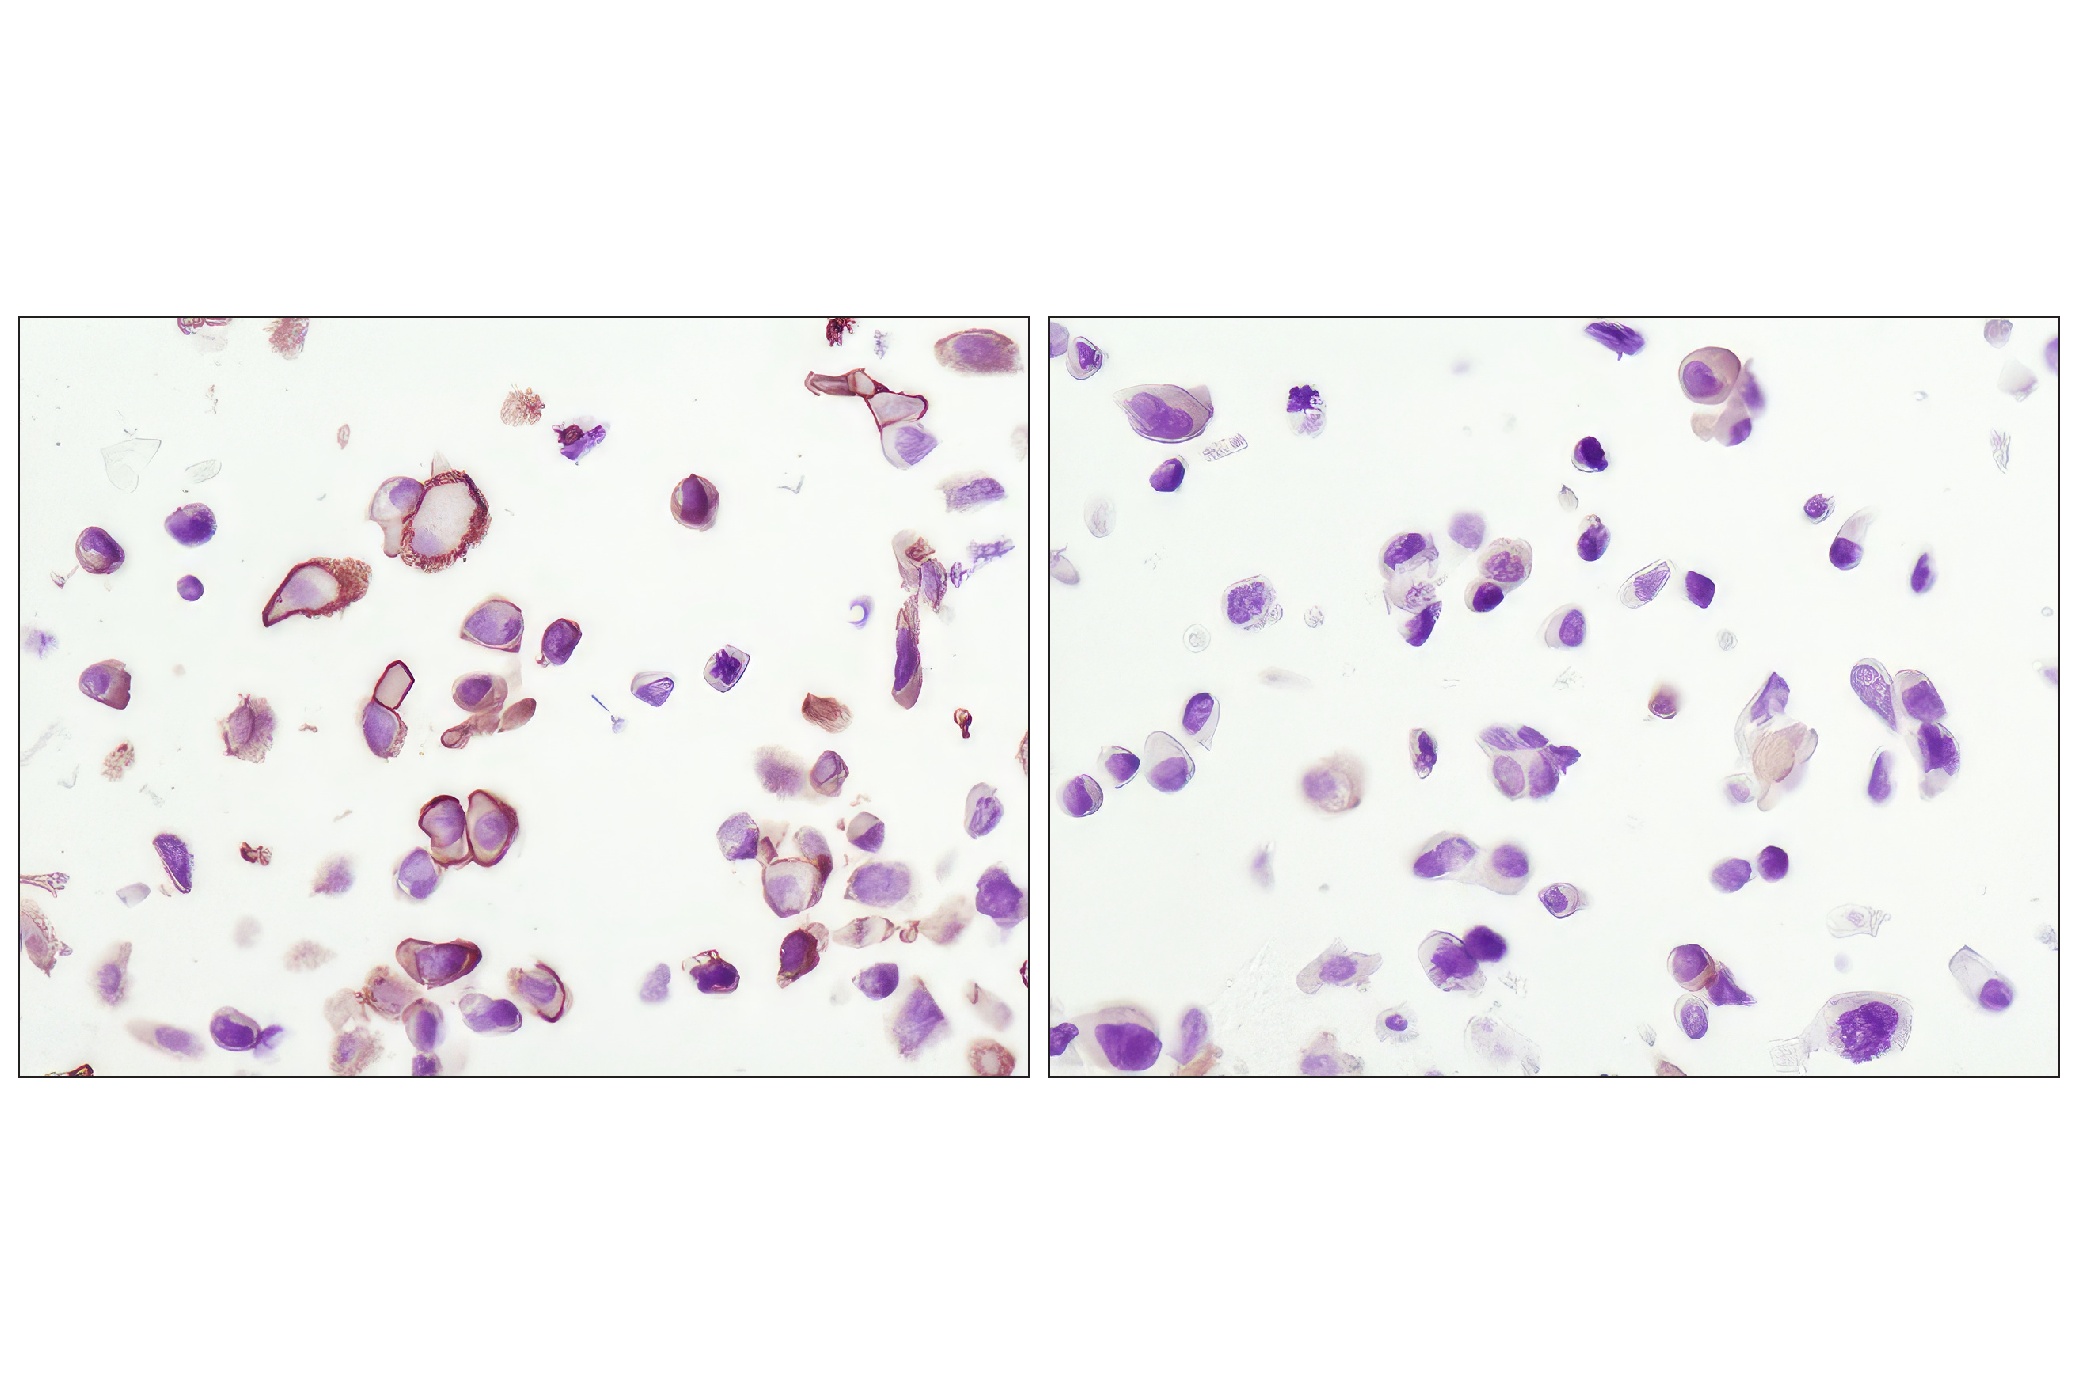  Image 44: Microglia Interferon-Related Module Antibody Sampler Kit